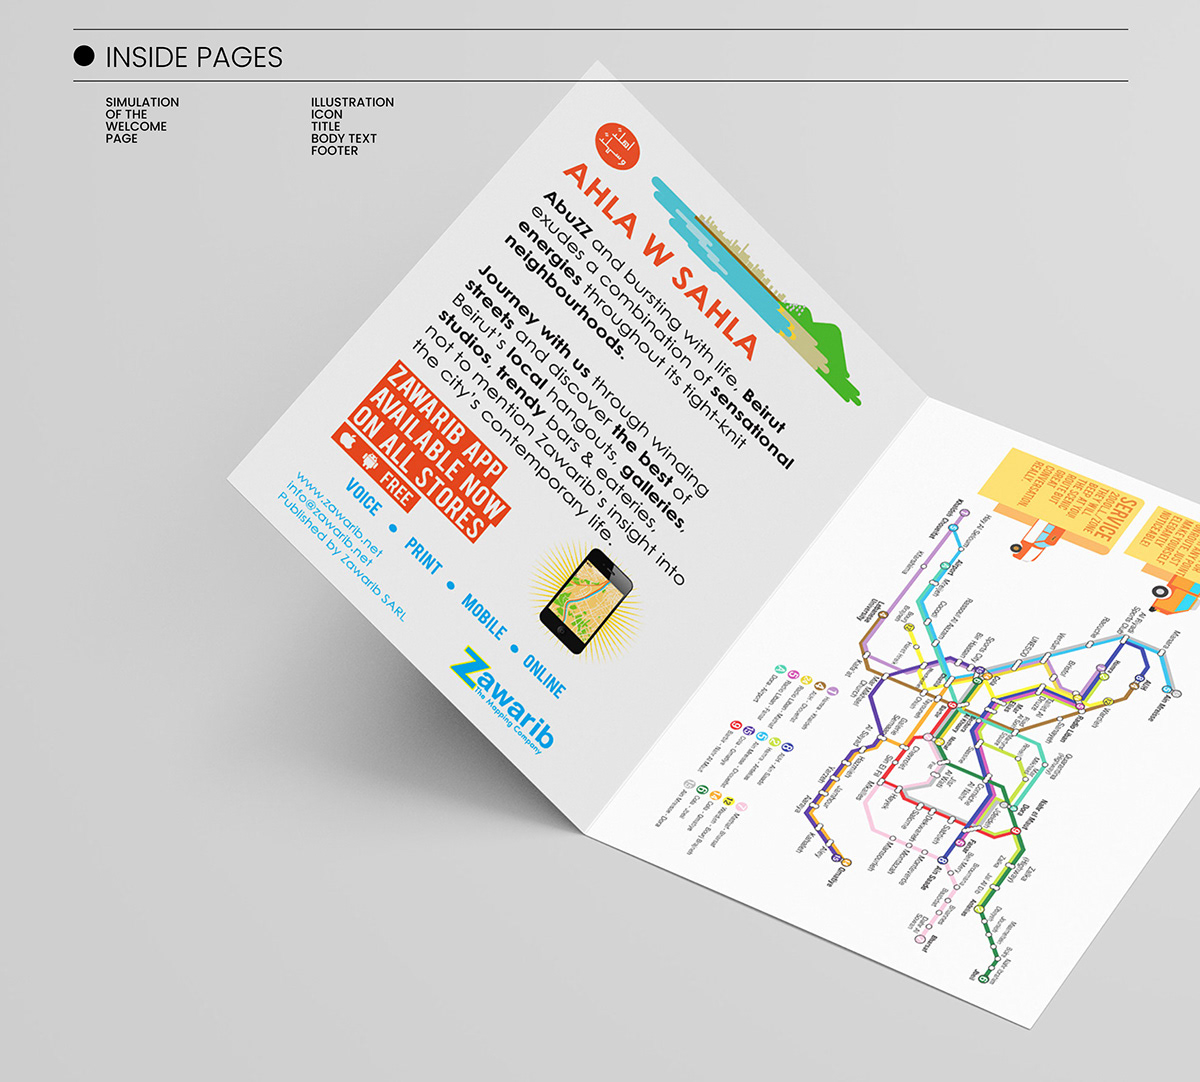 Mapping maps zawarib Beirut Guide graphics Cartooning  coverdesign cover design